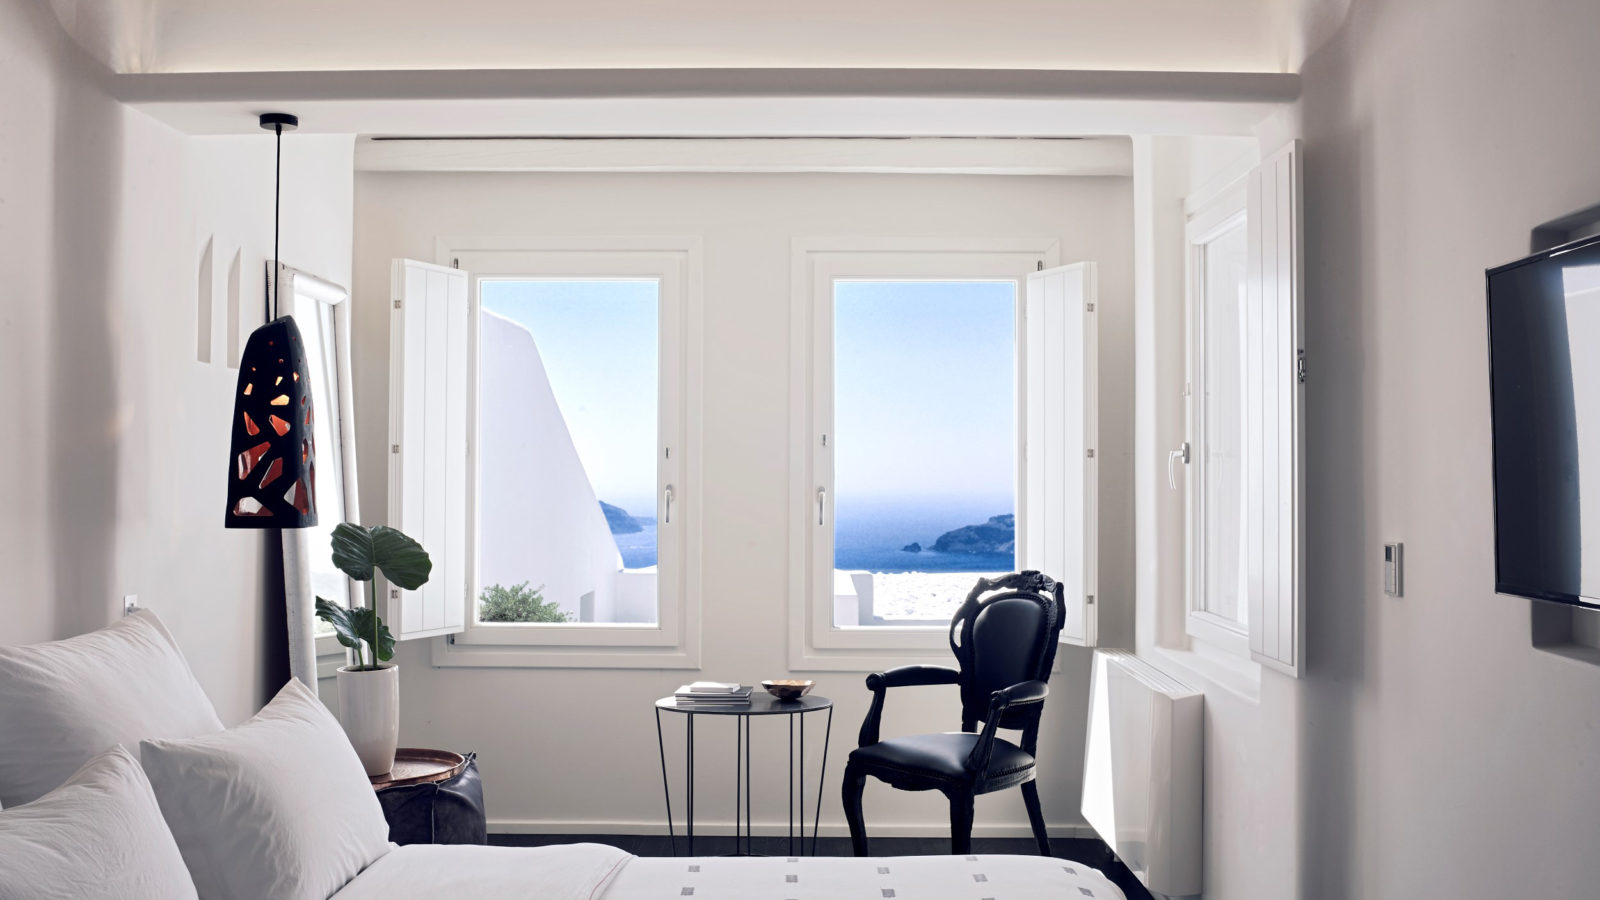 Best hotels in Imerovigli, Santorini: Cavo Tagoo